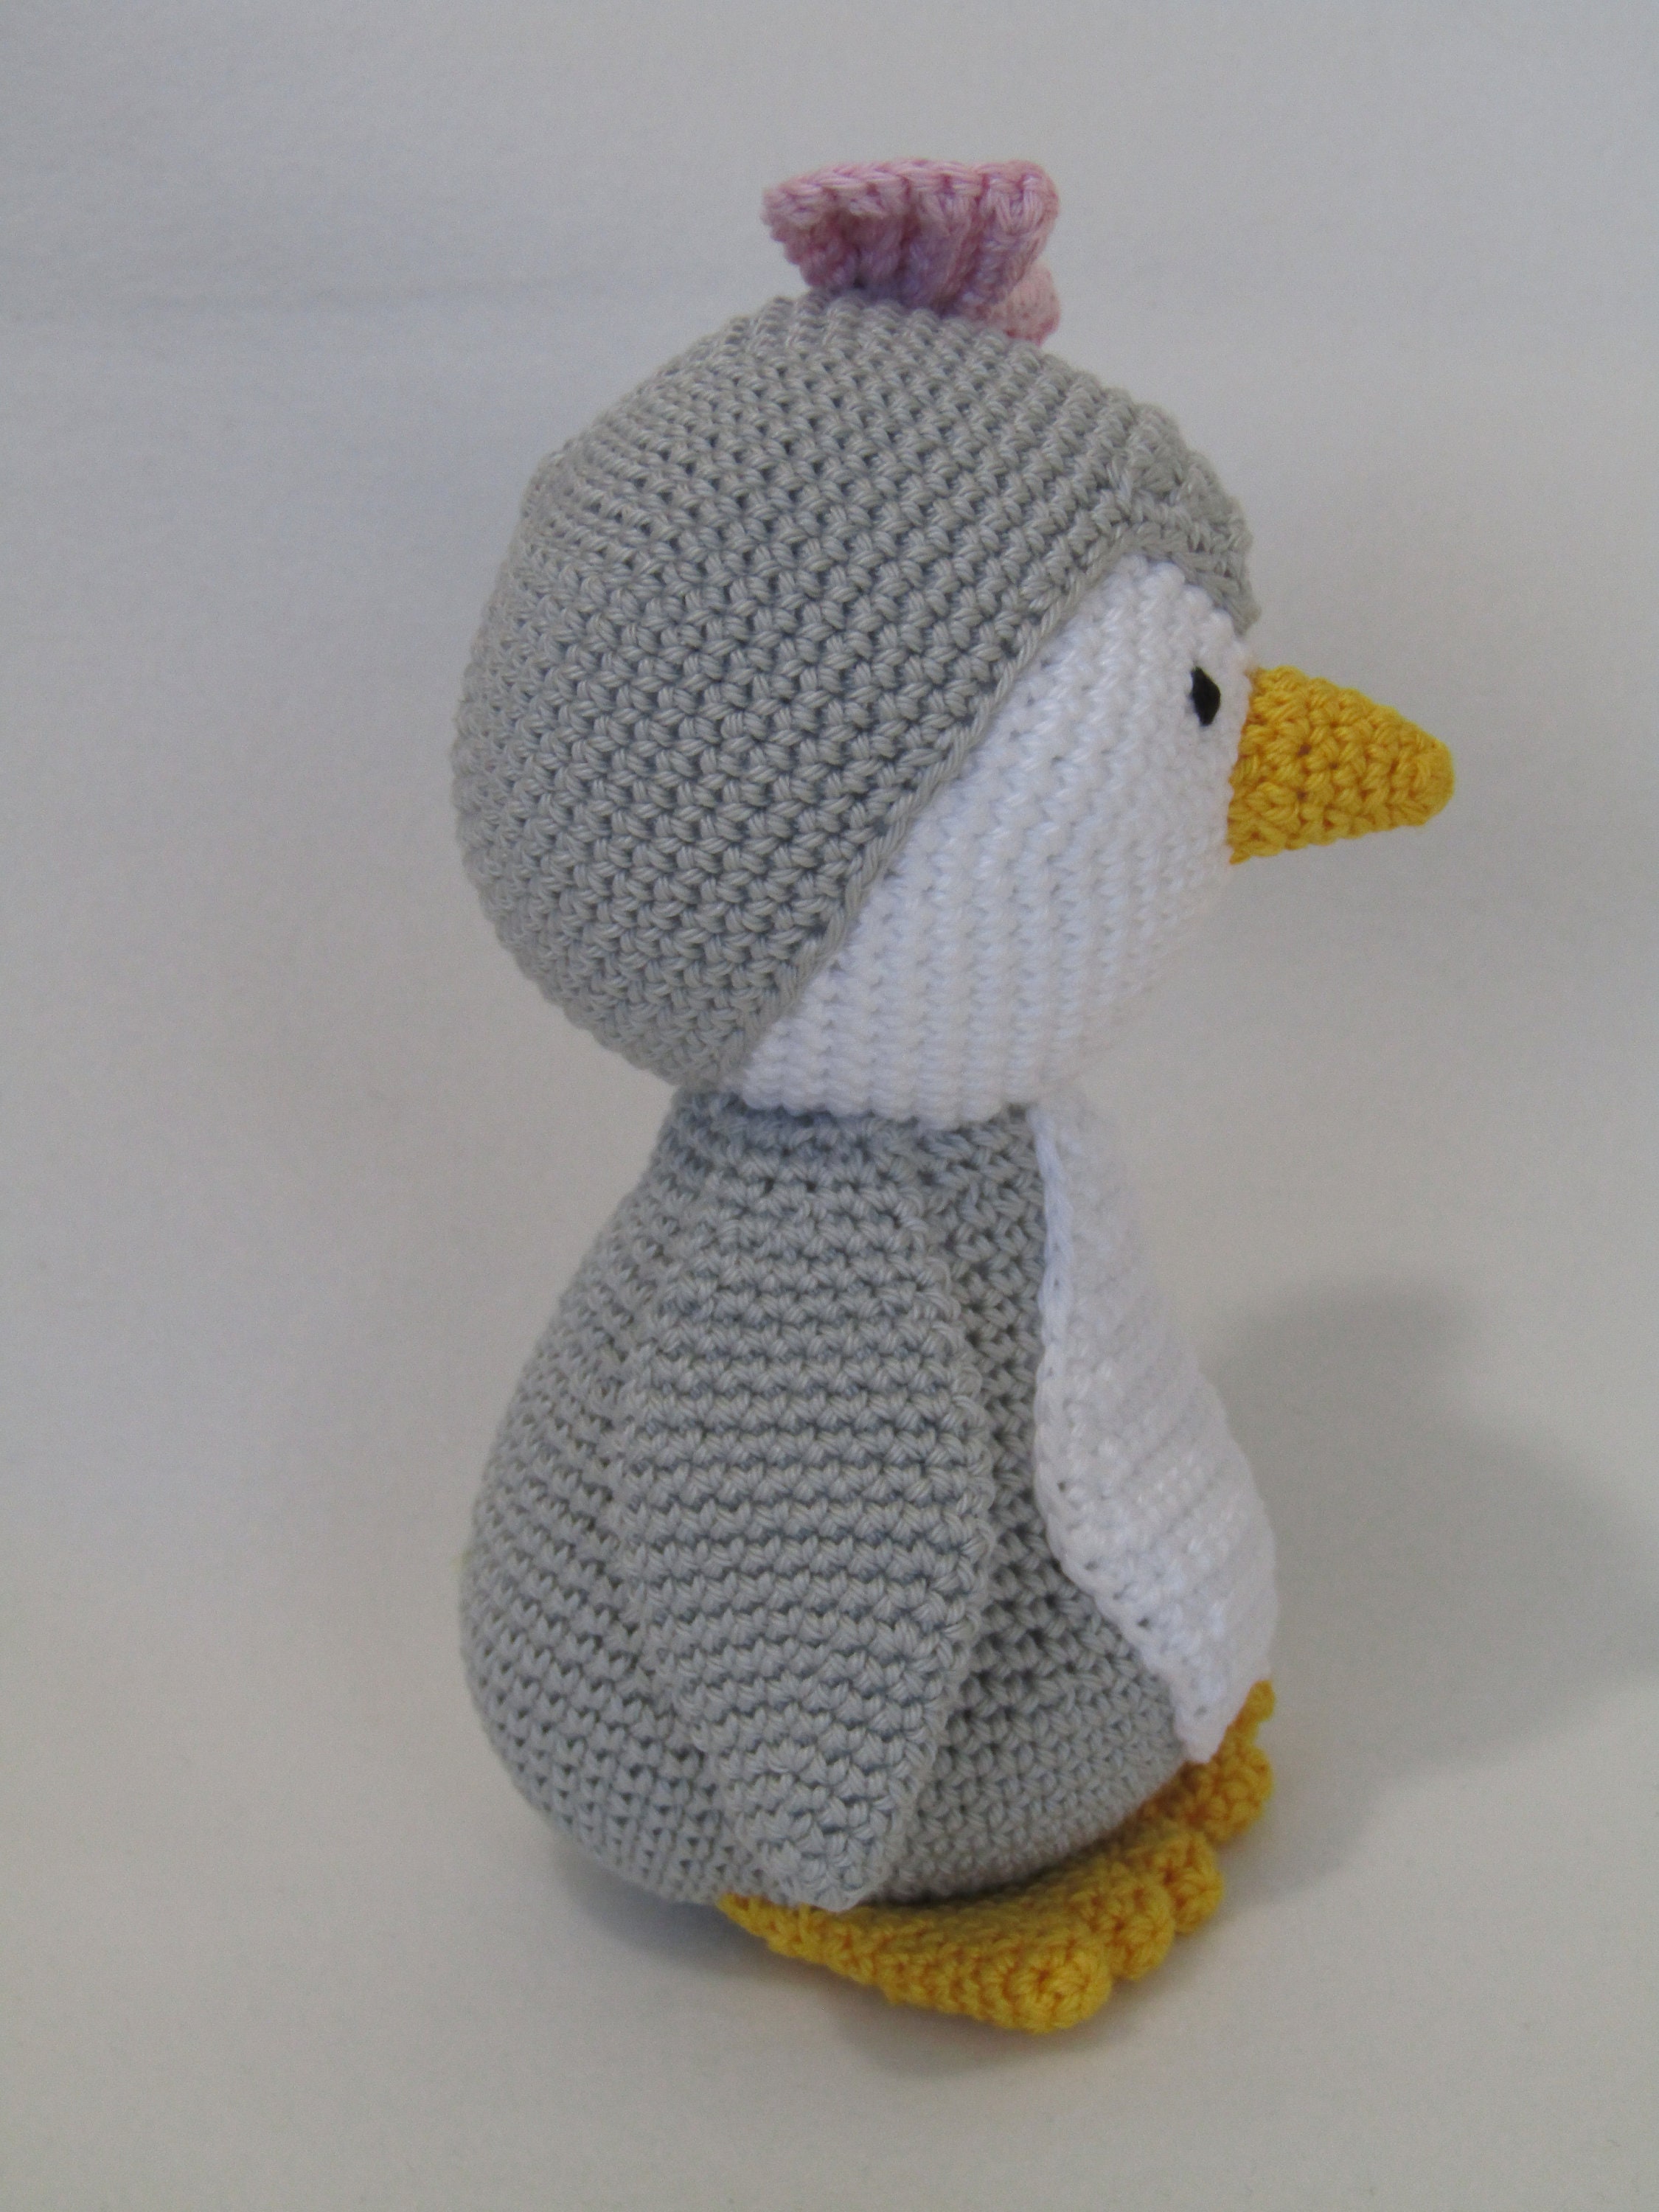 Bébé pingouin au crochet : patron d'amigurumi gratuit